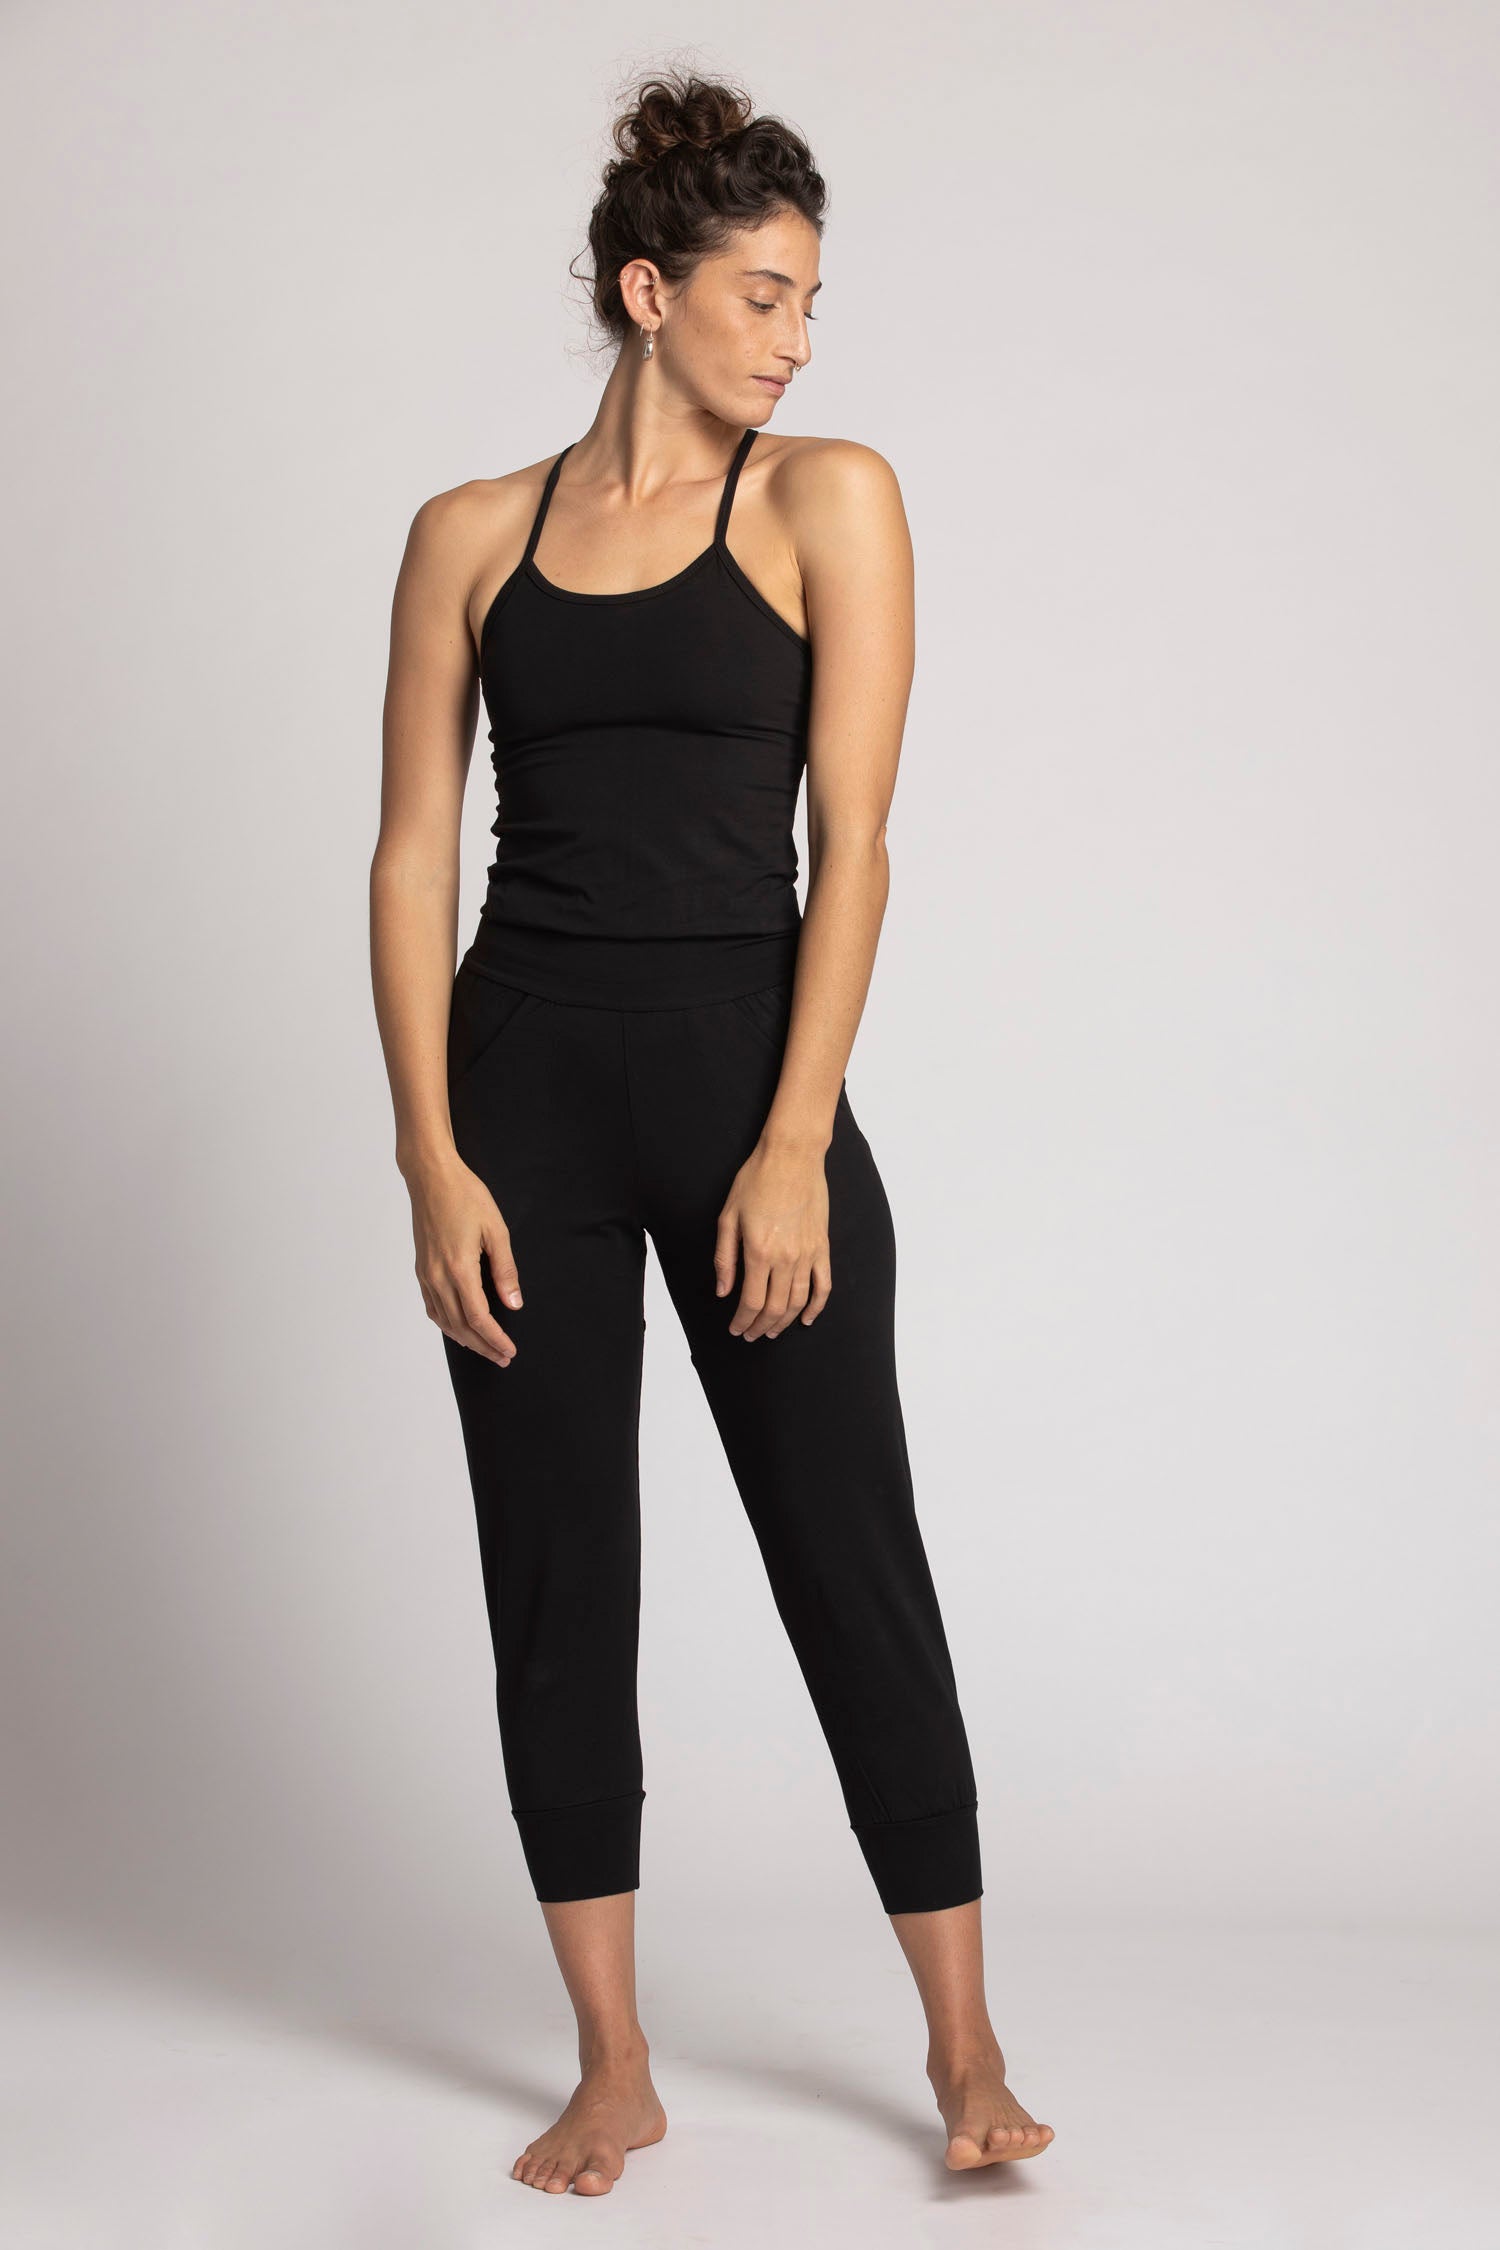 Premium Cotton Linen Yoga Jump Suit For Women Ideal For Fitness